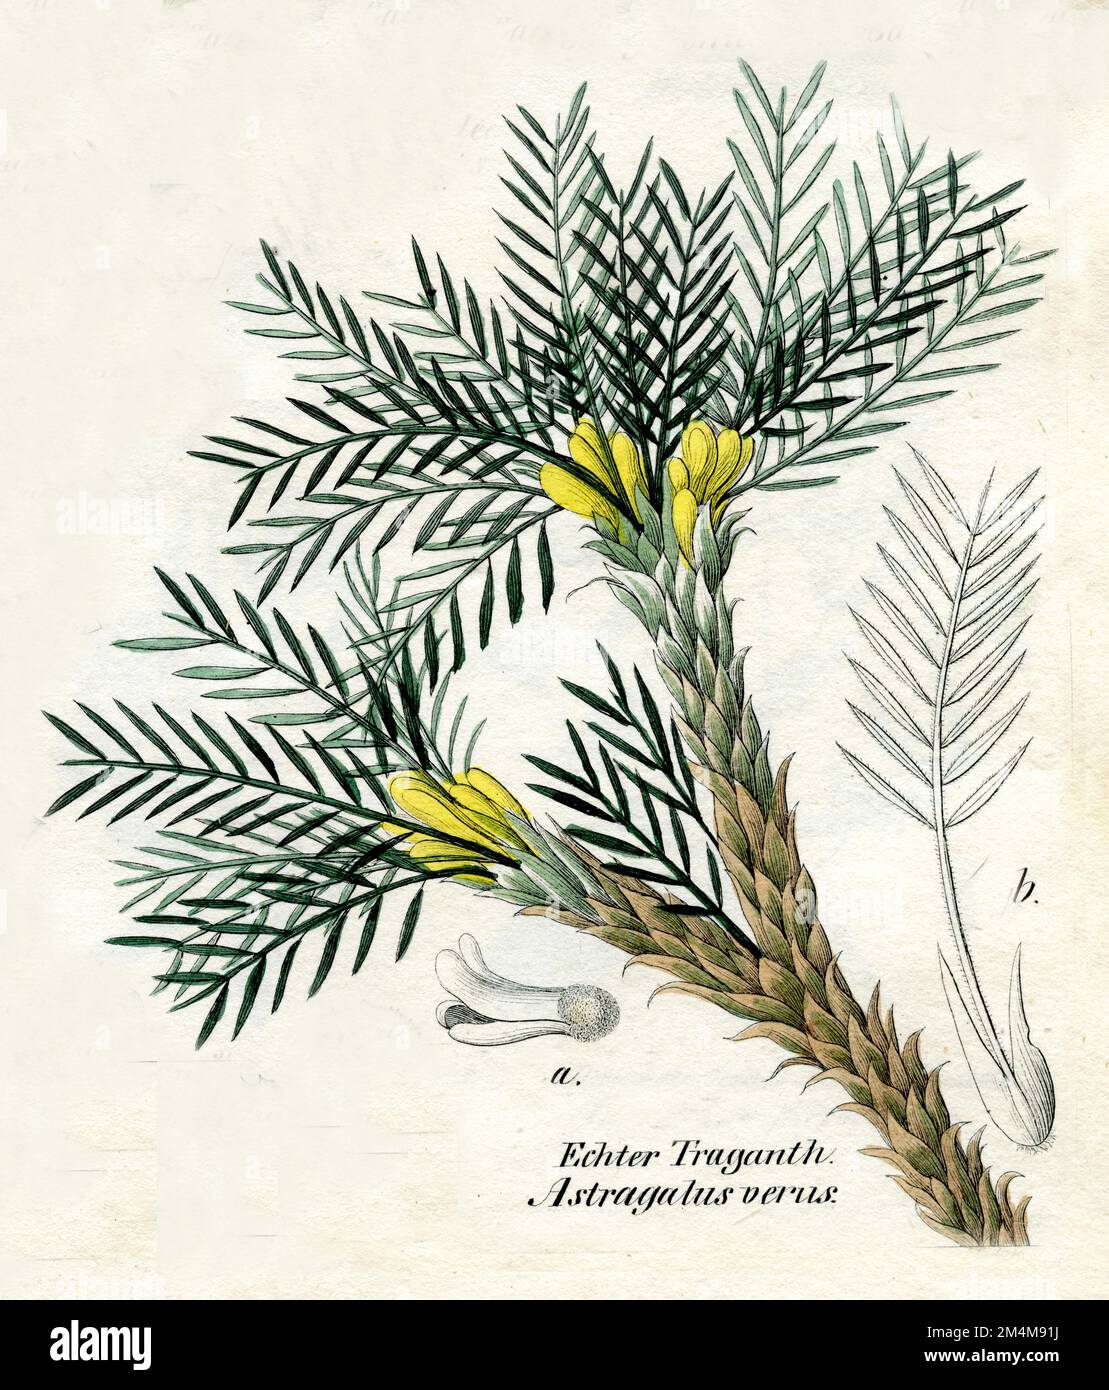 Adragante, gomma adragante milkvech Astragalus gummifer, (libro di botanica, 1850), Astragalus gummifer, Traganthpflanze Foto Stock